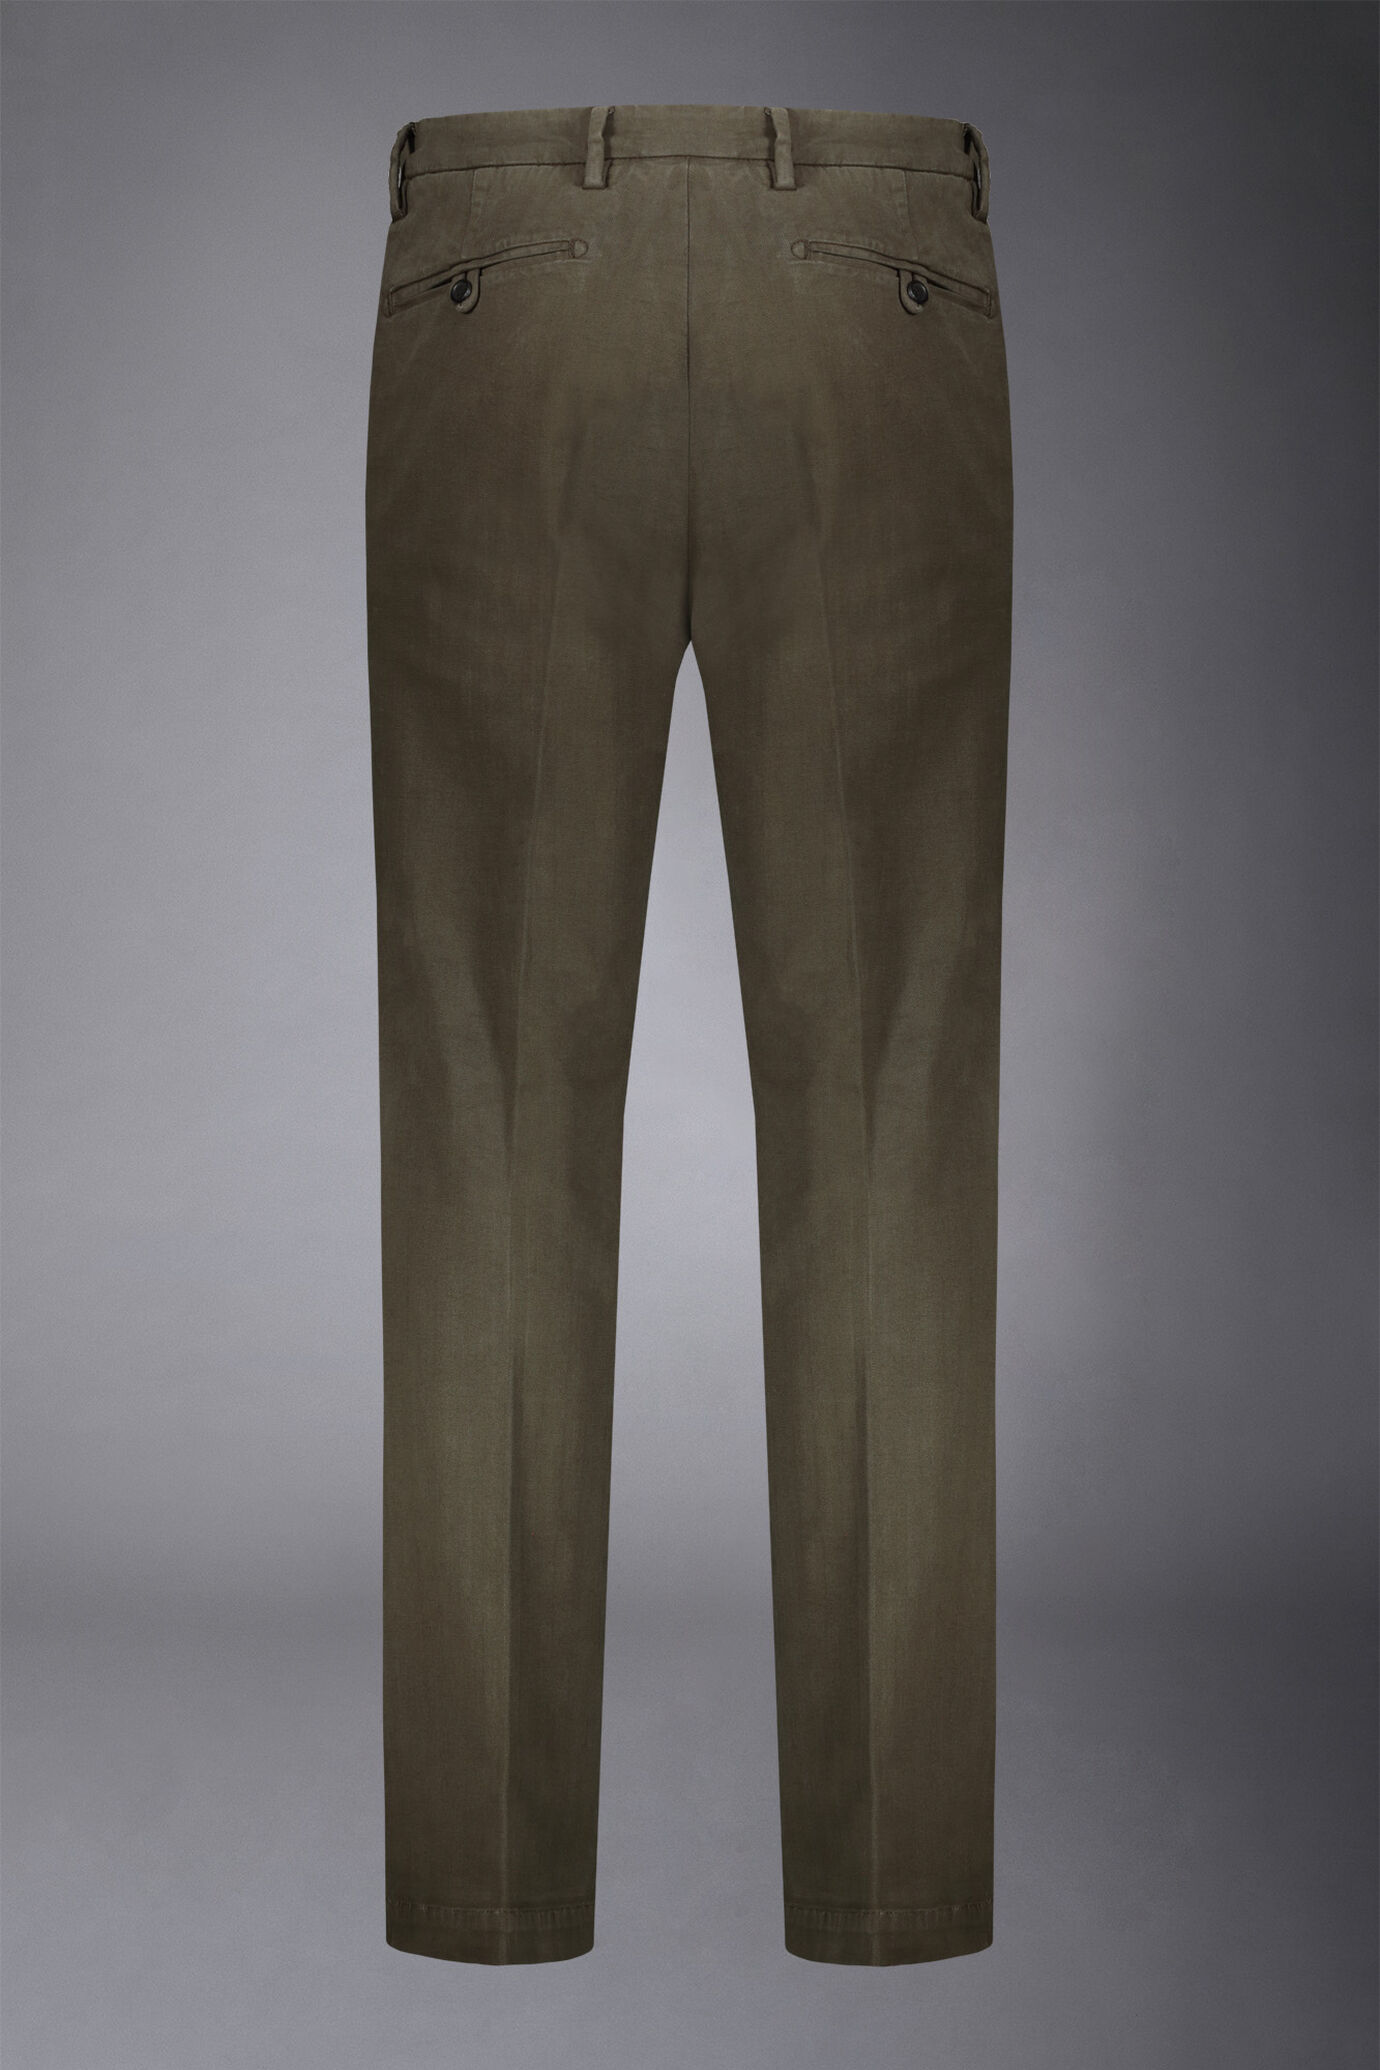 Pantalone classico uomo costruzione tessuto spigato regular fit image number 5